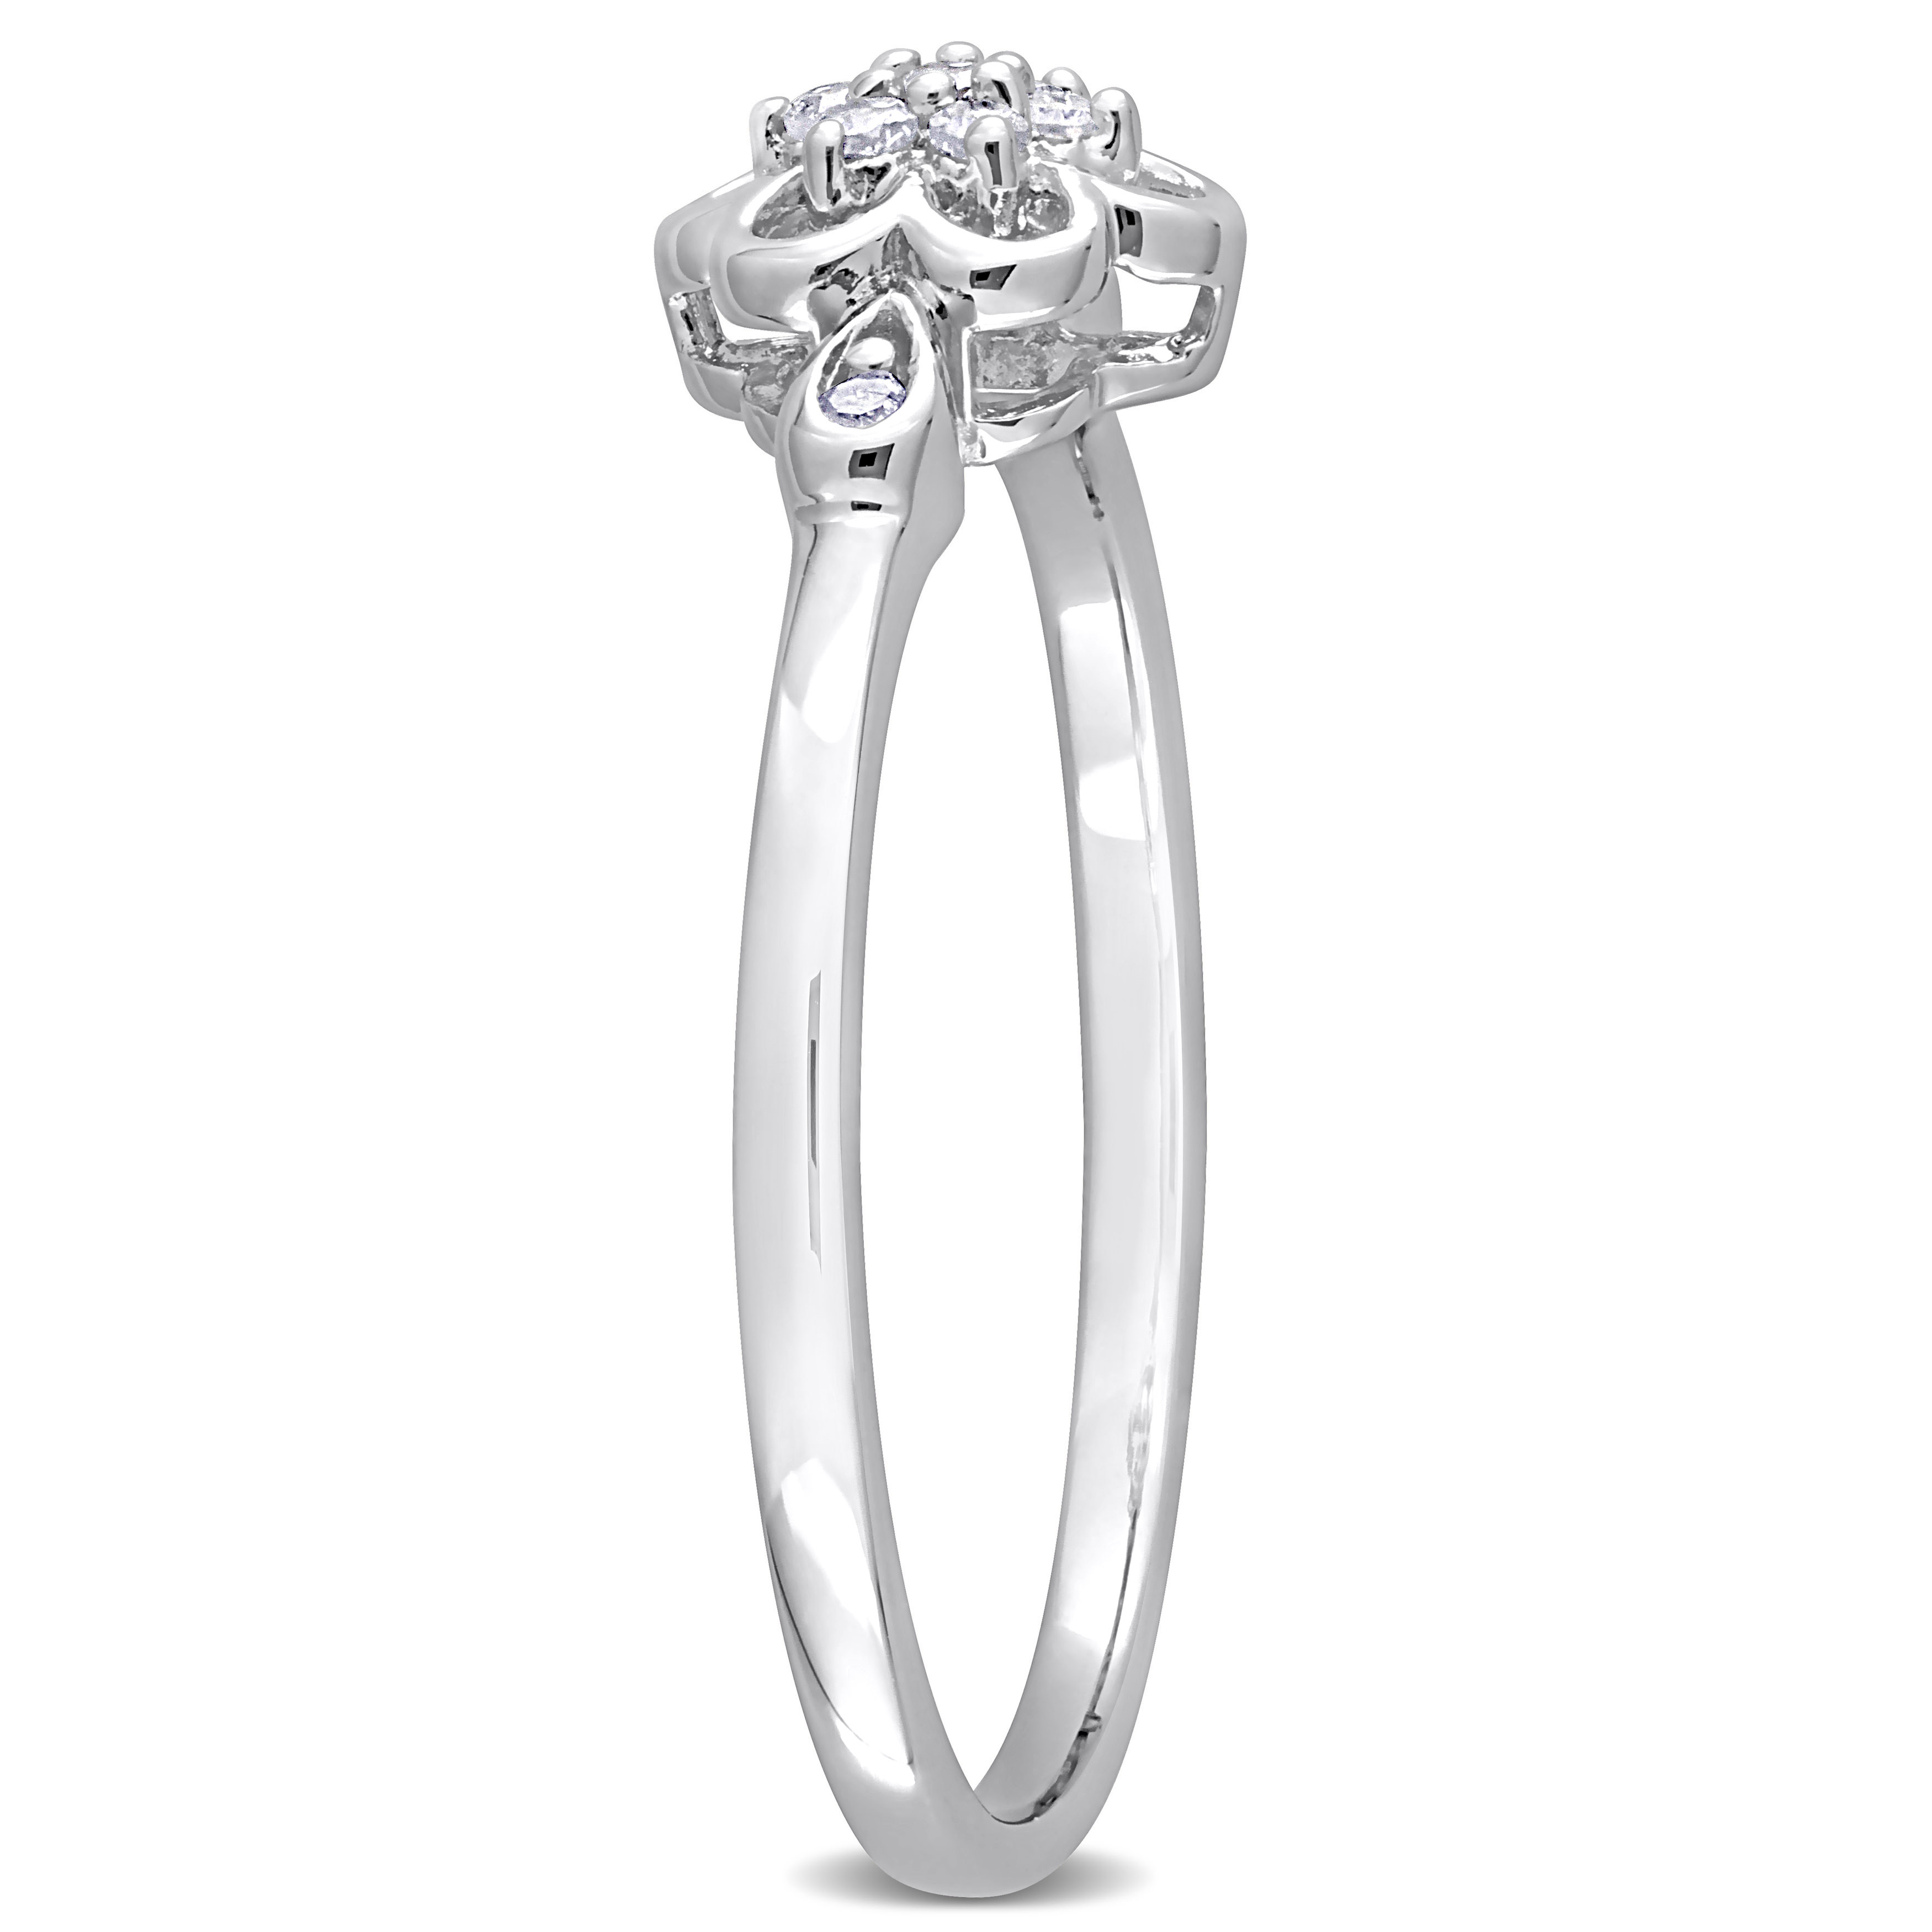 1/10 CT TDW Diamond Flower Ring in Sterling Silver